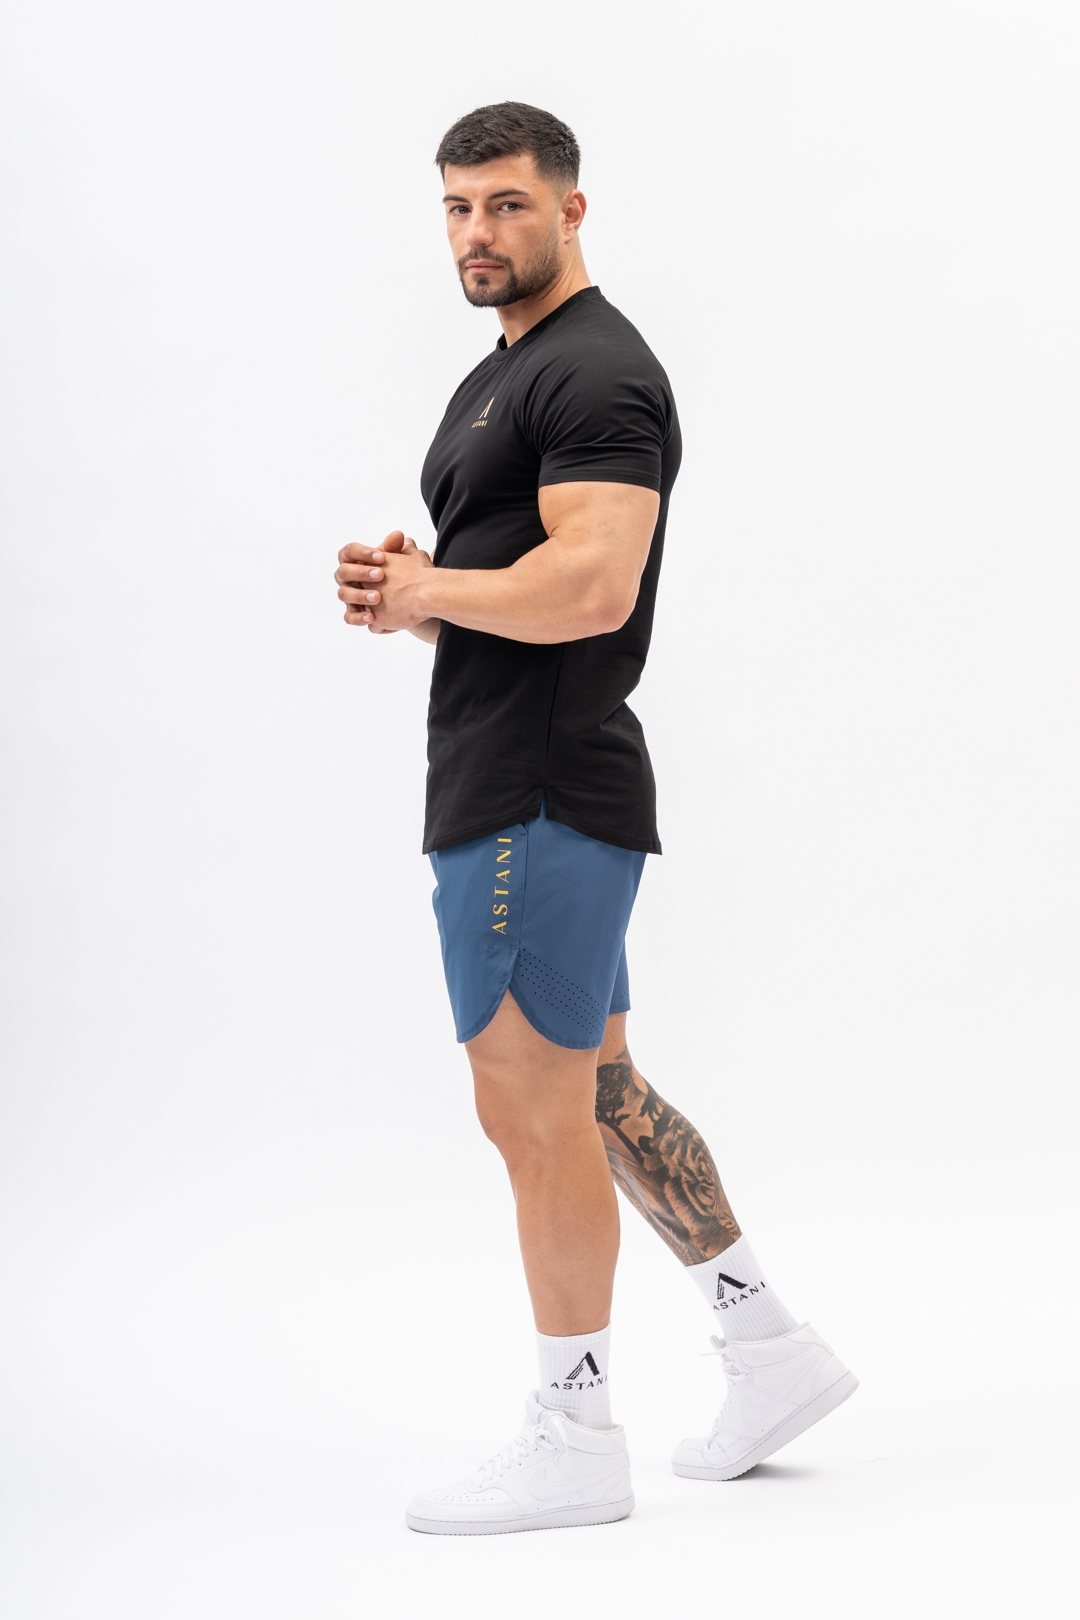 Code Black Cotton Stretch Workout Gym Lifestyle T-Shirt